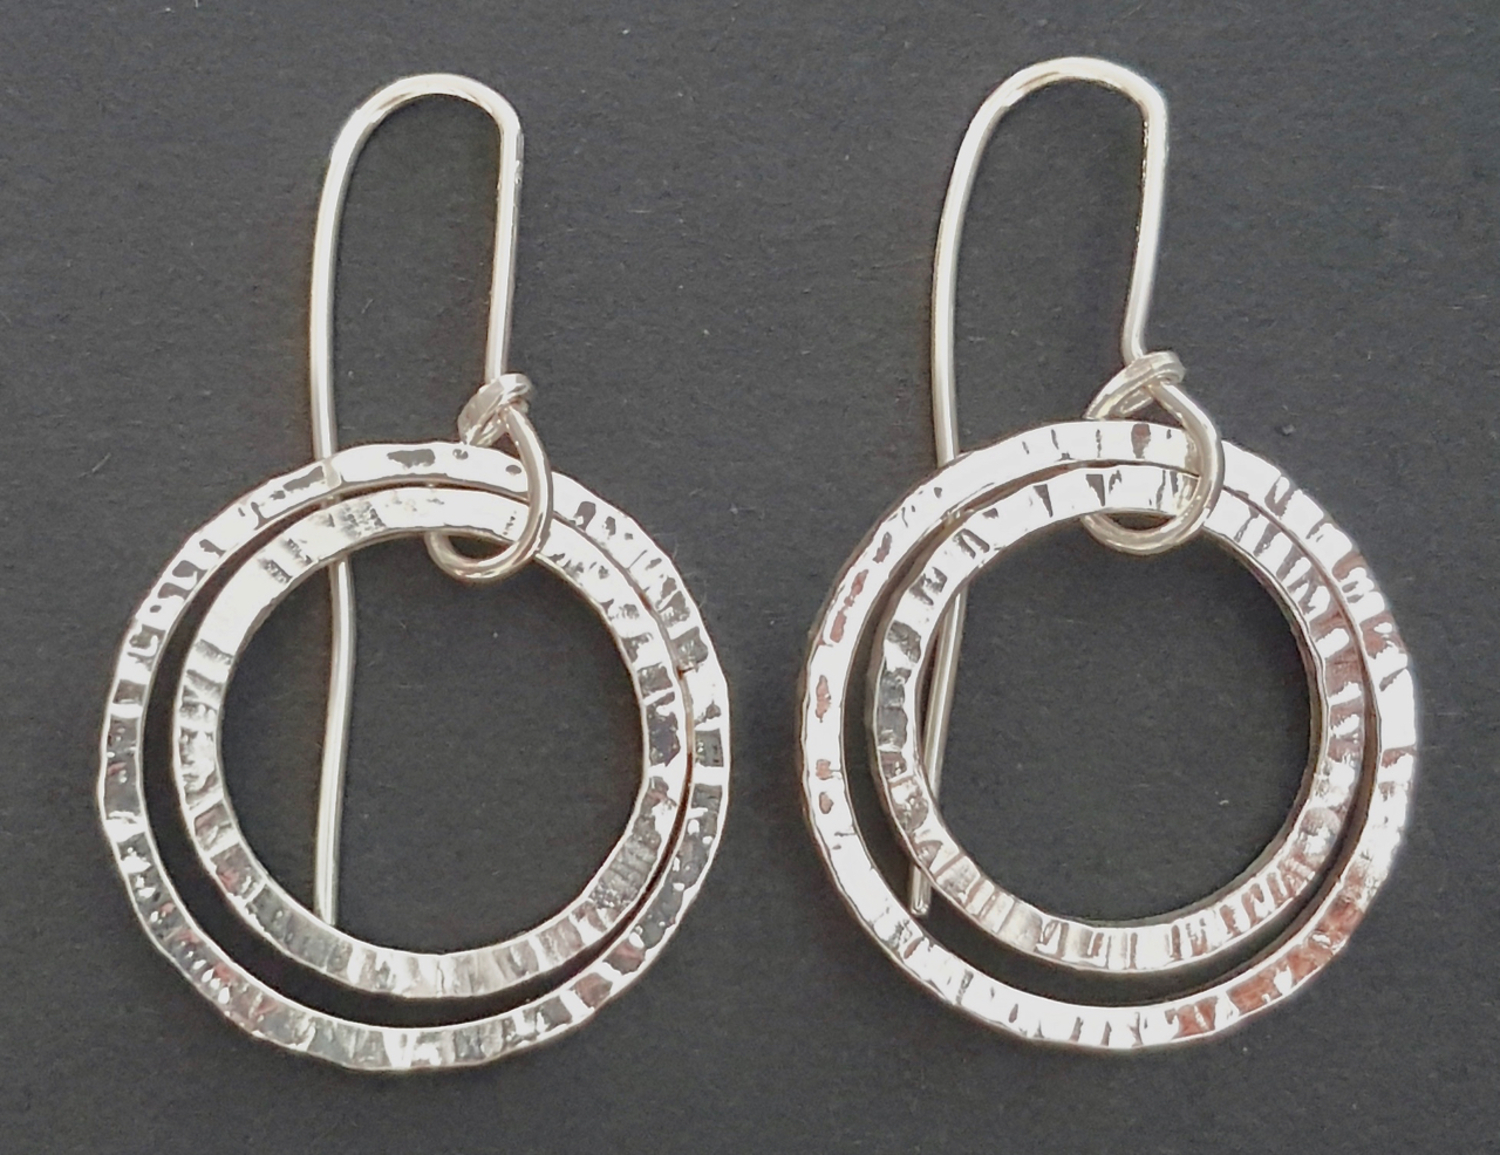 Forged double loop earrings (s)